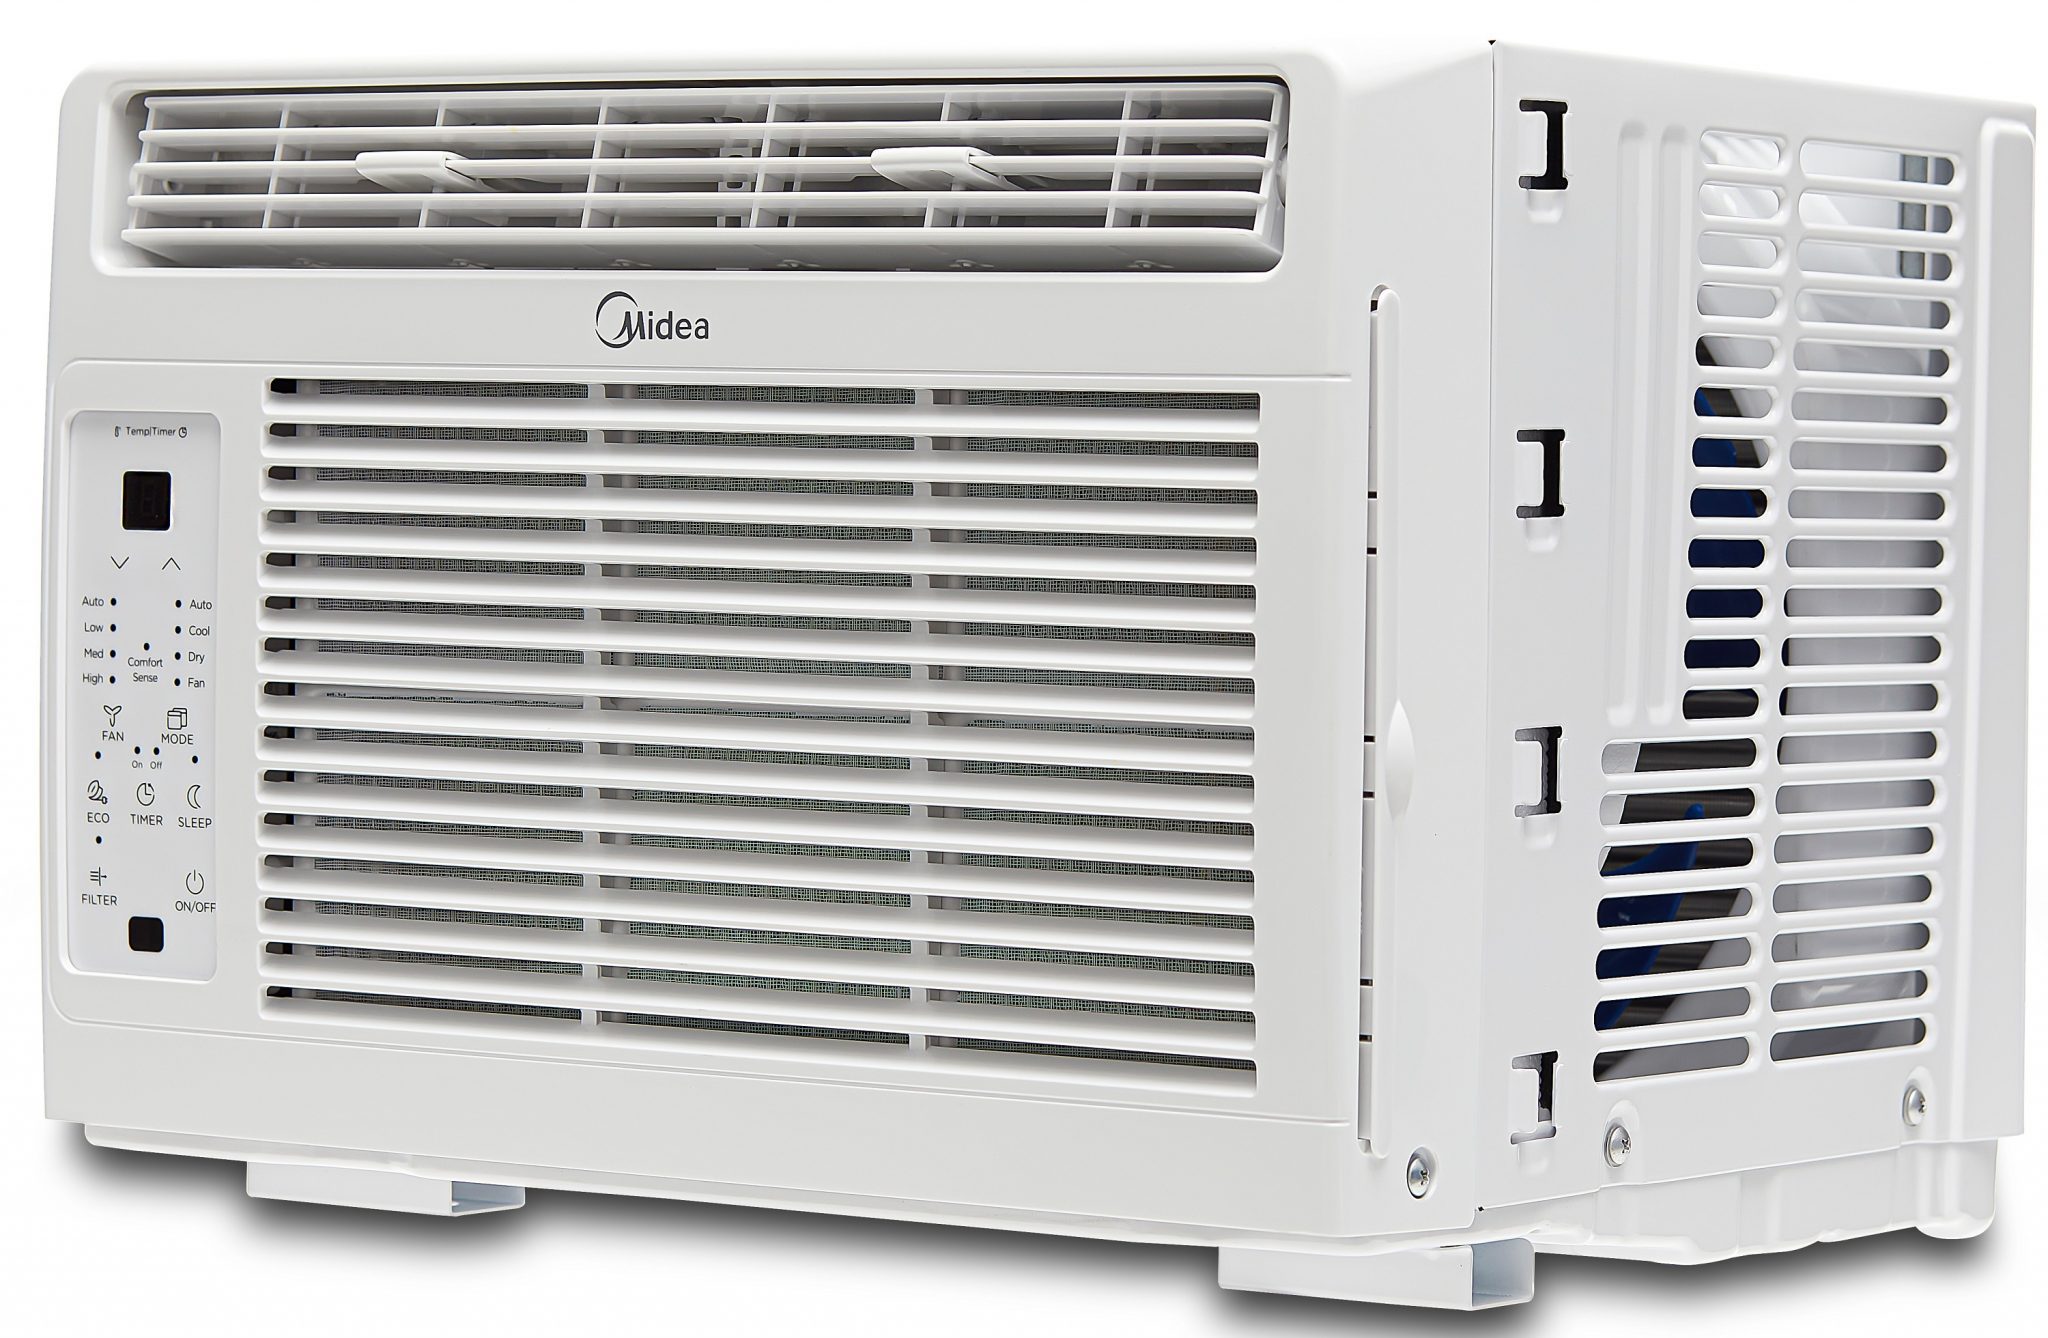 Midea 6,000 BTU 115V Window Air Conditioner with ComfortSense Remote, White, MAW06R1WWT 